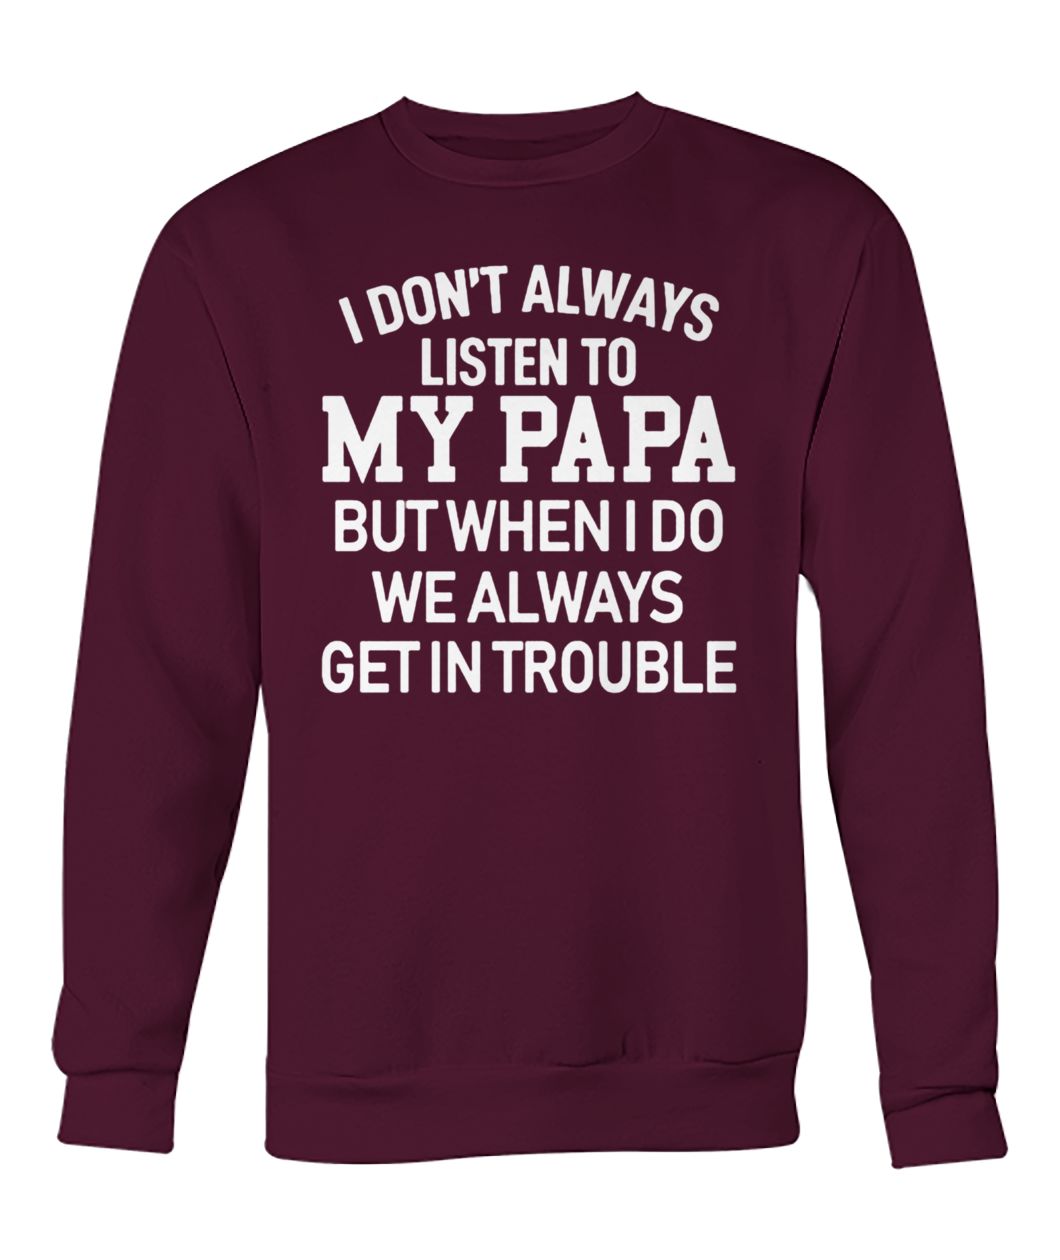 I don't always listen to my papa crew neck sweatshirt